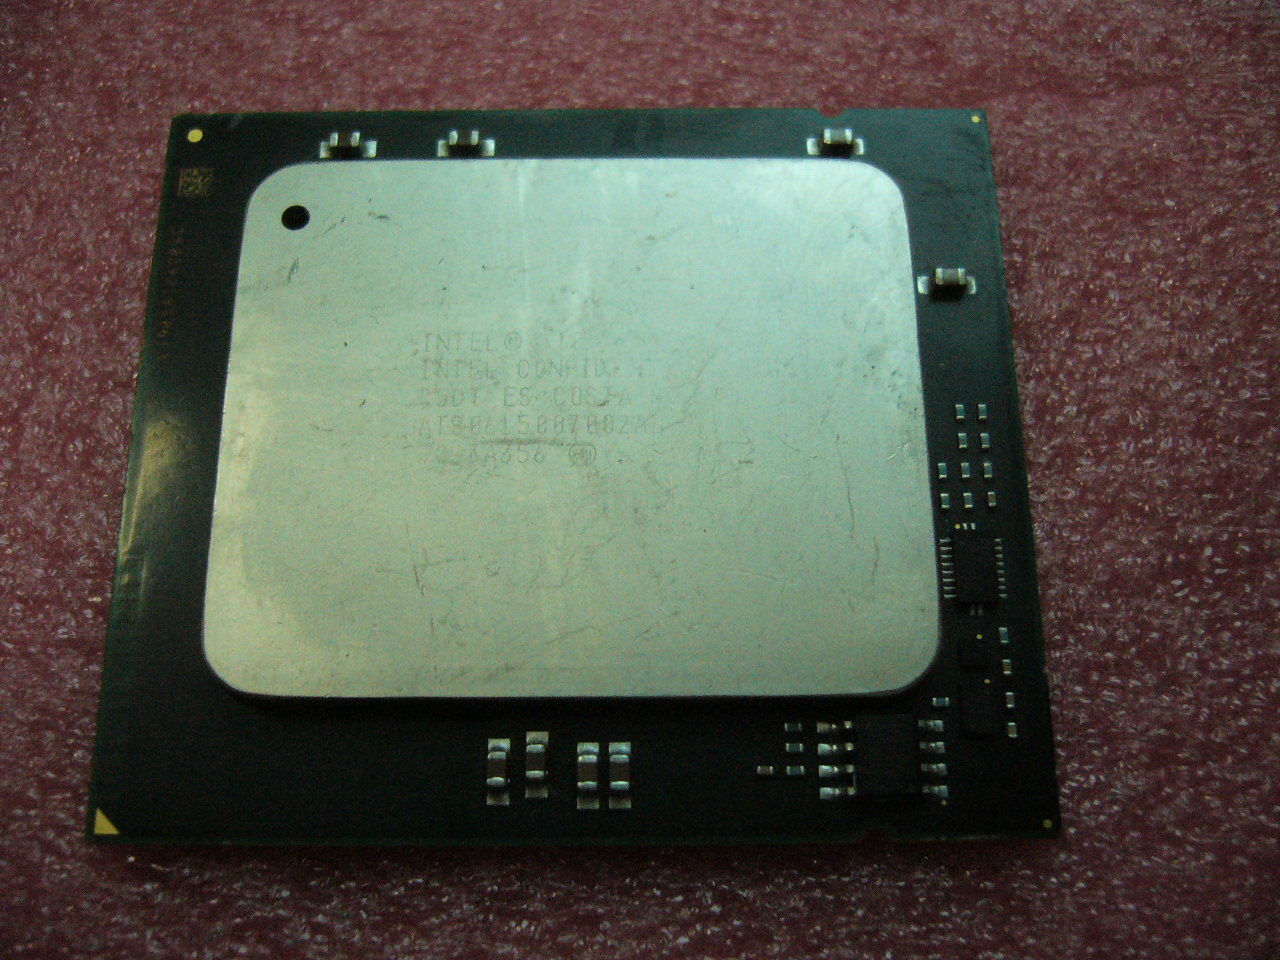 QTY 1x INTEL Ten-Cores ES CPU E7-8867L 2.13GHZ/30MB/6.4 LGA1567 AT80615007002AB - Click Image to Close